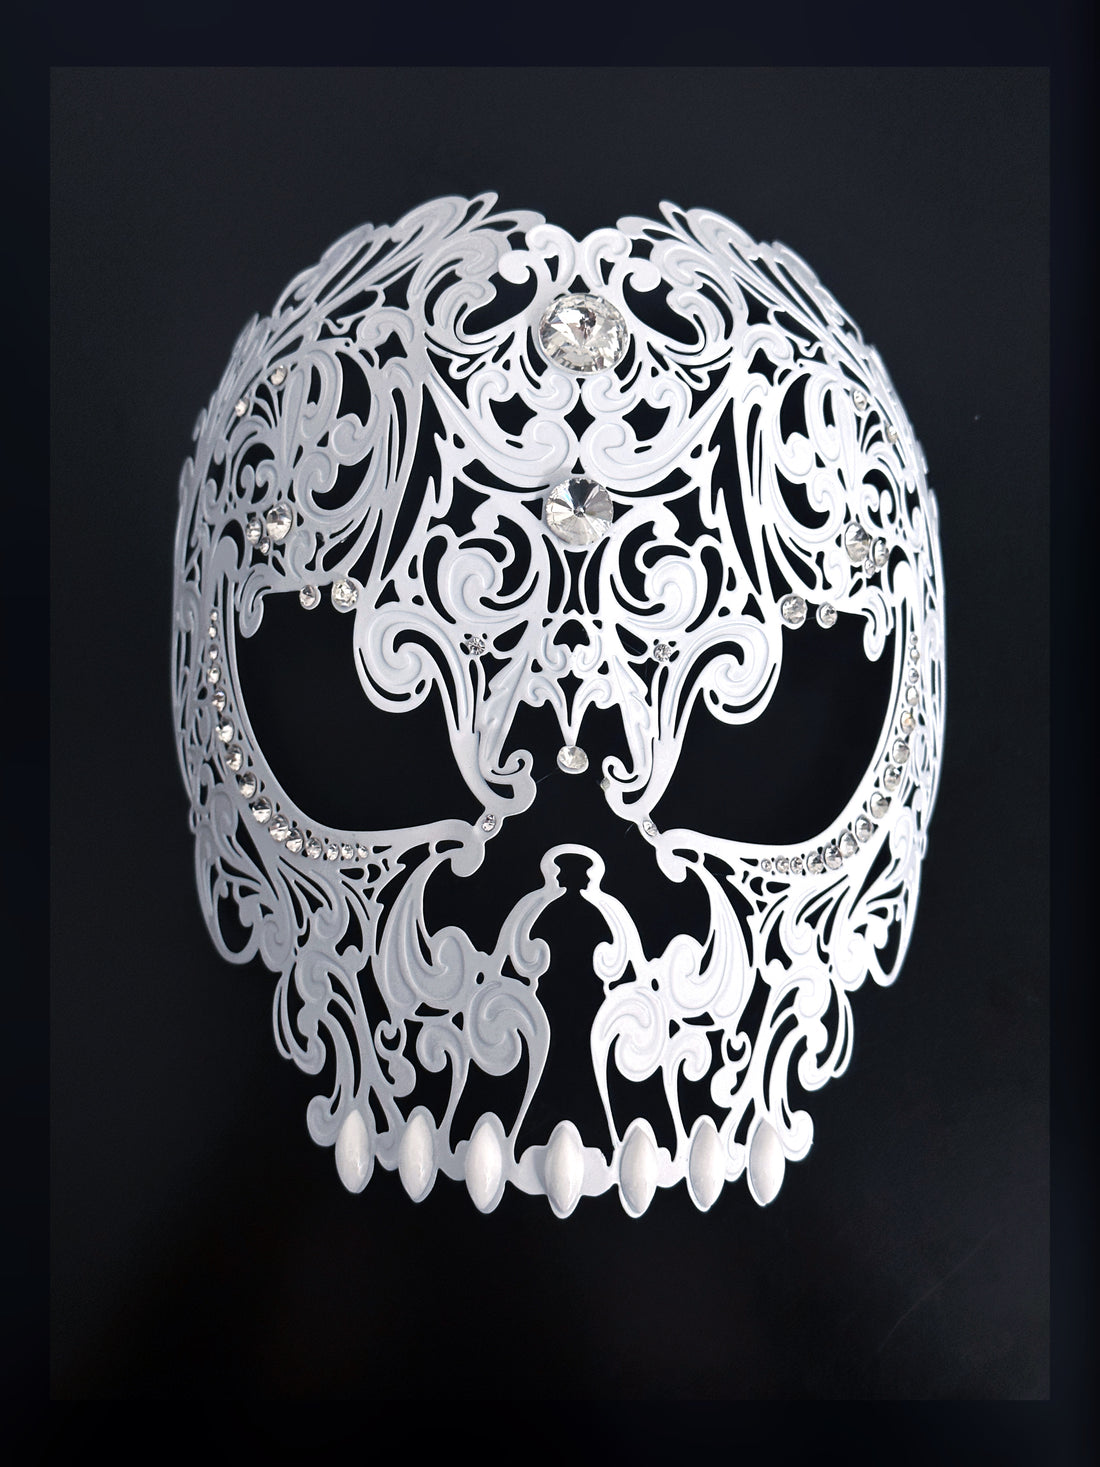 White metal skull masquerade mask for sale with rhinestone embellishment.